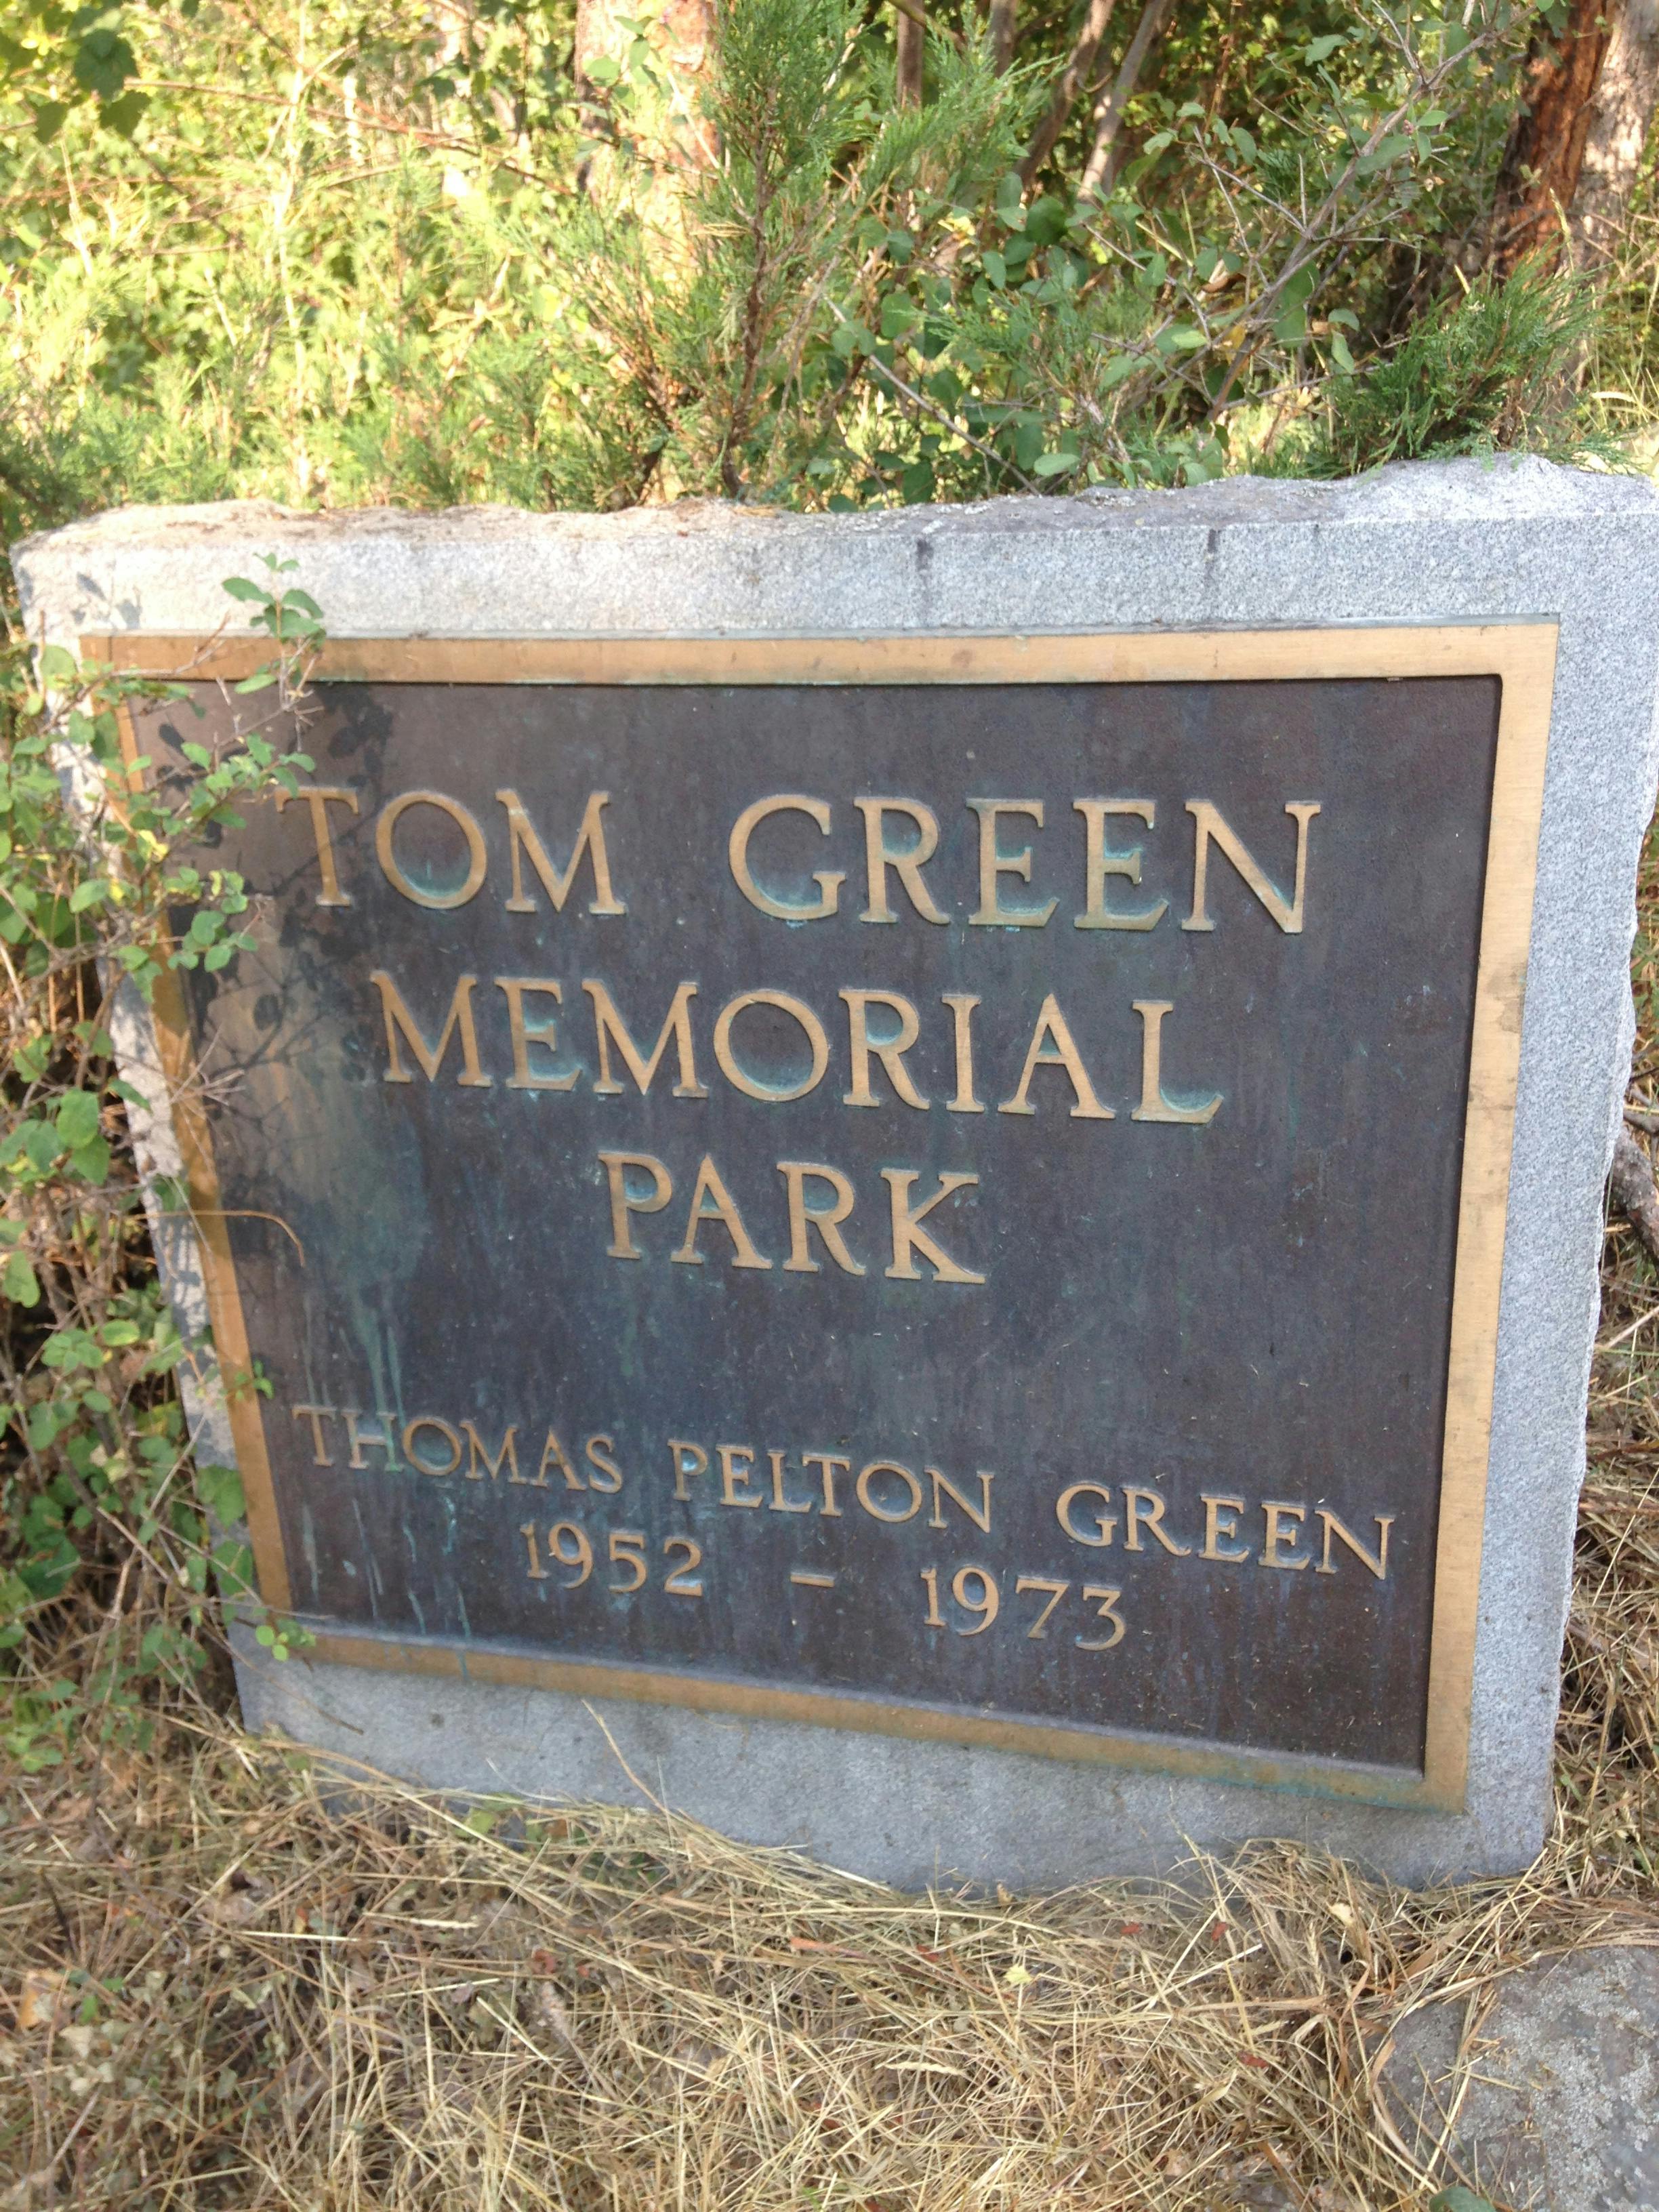 Tom Green Memorial Park sign